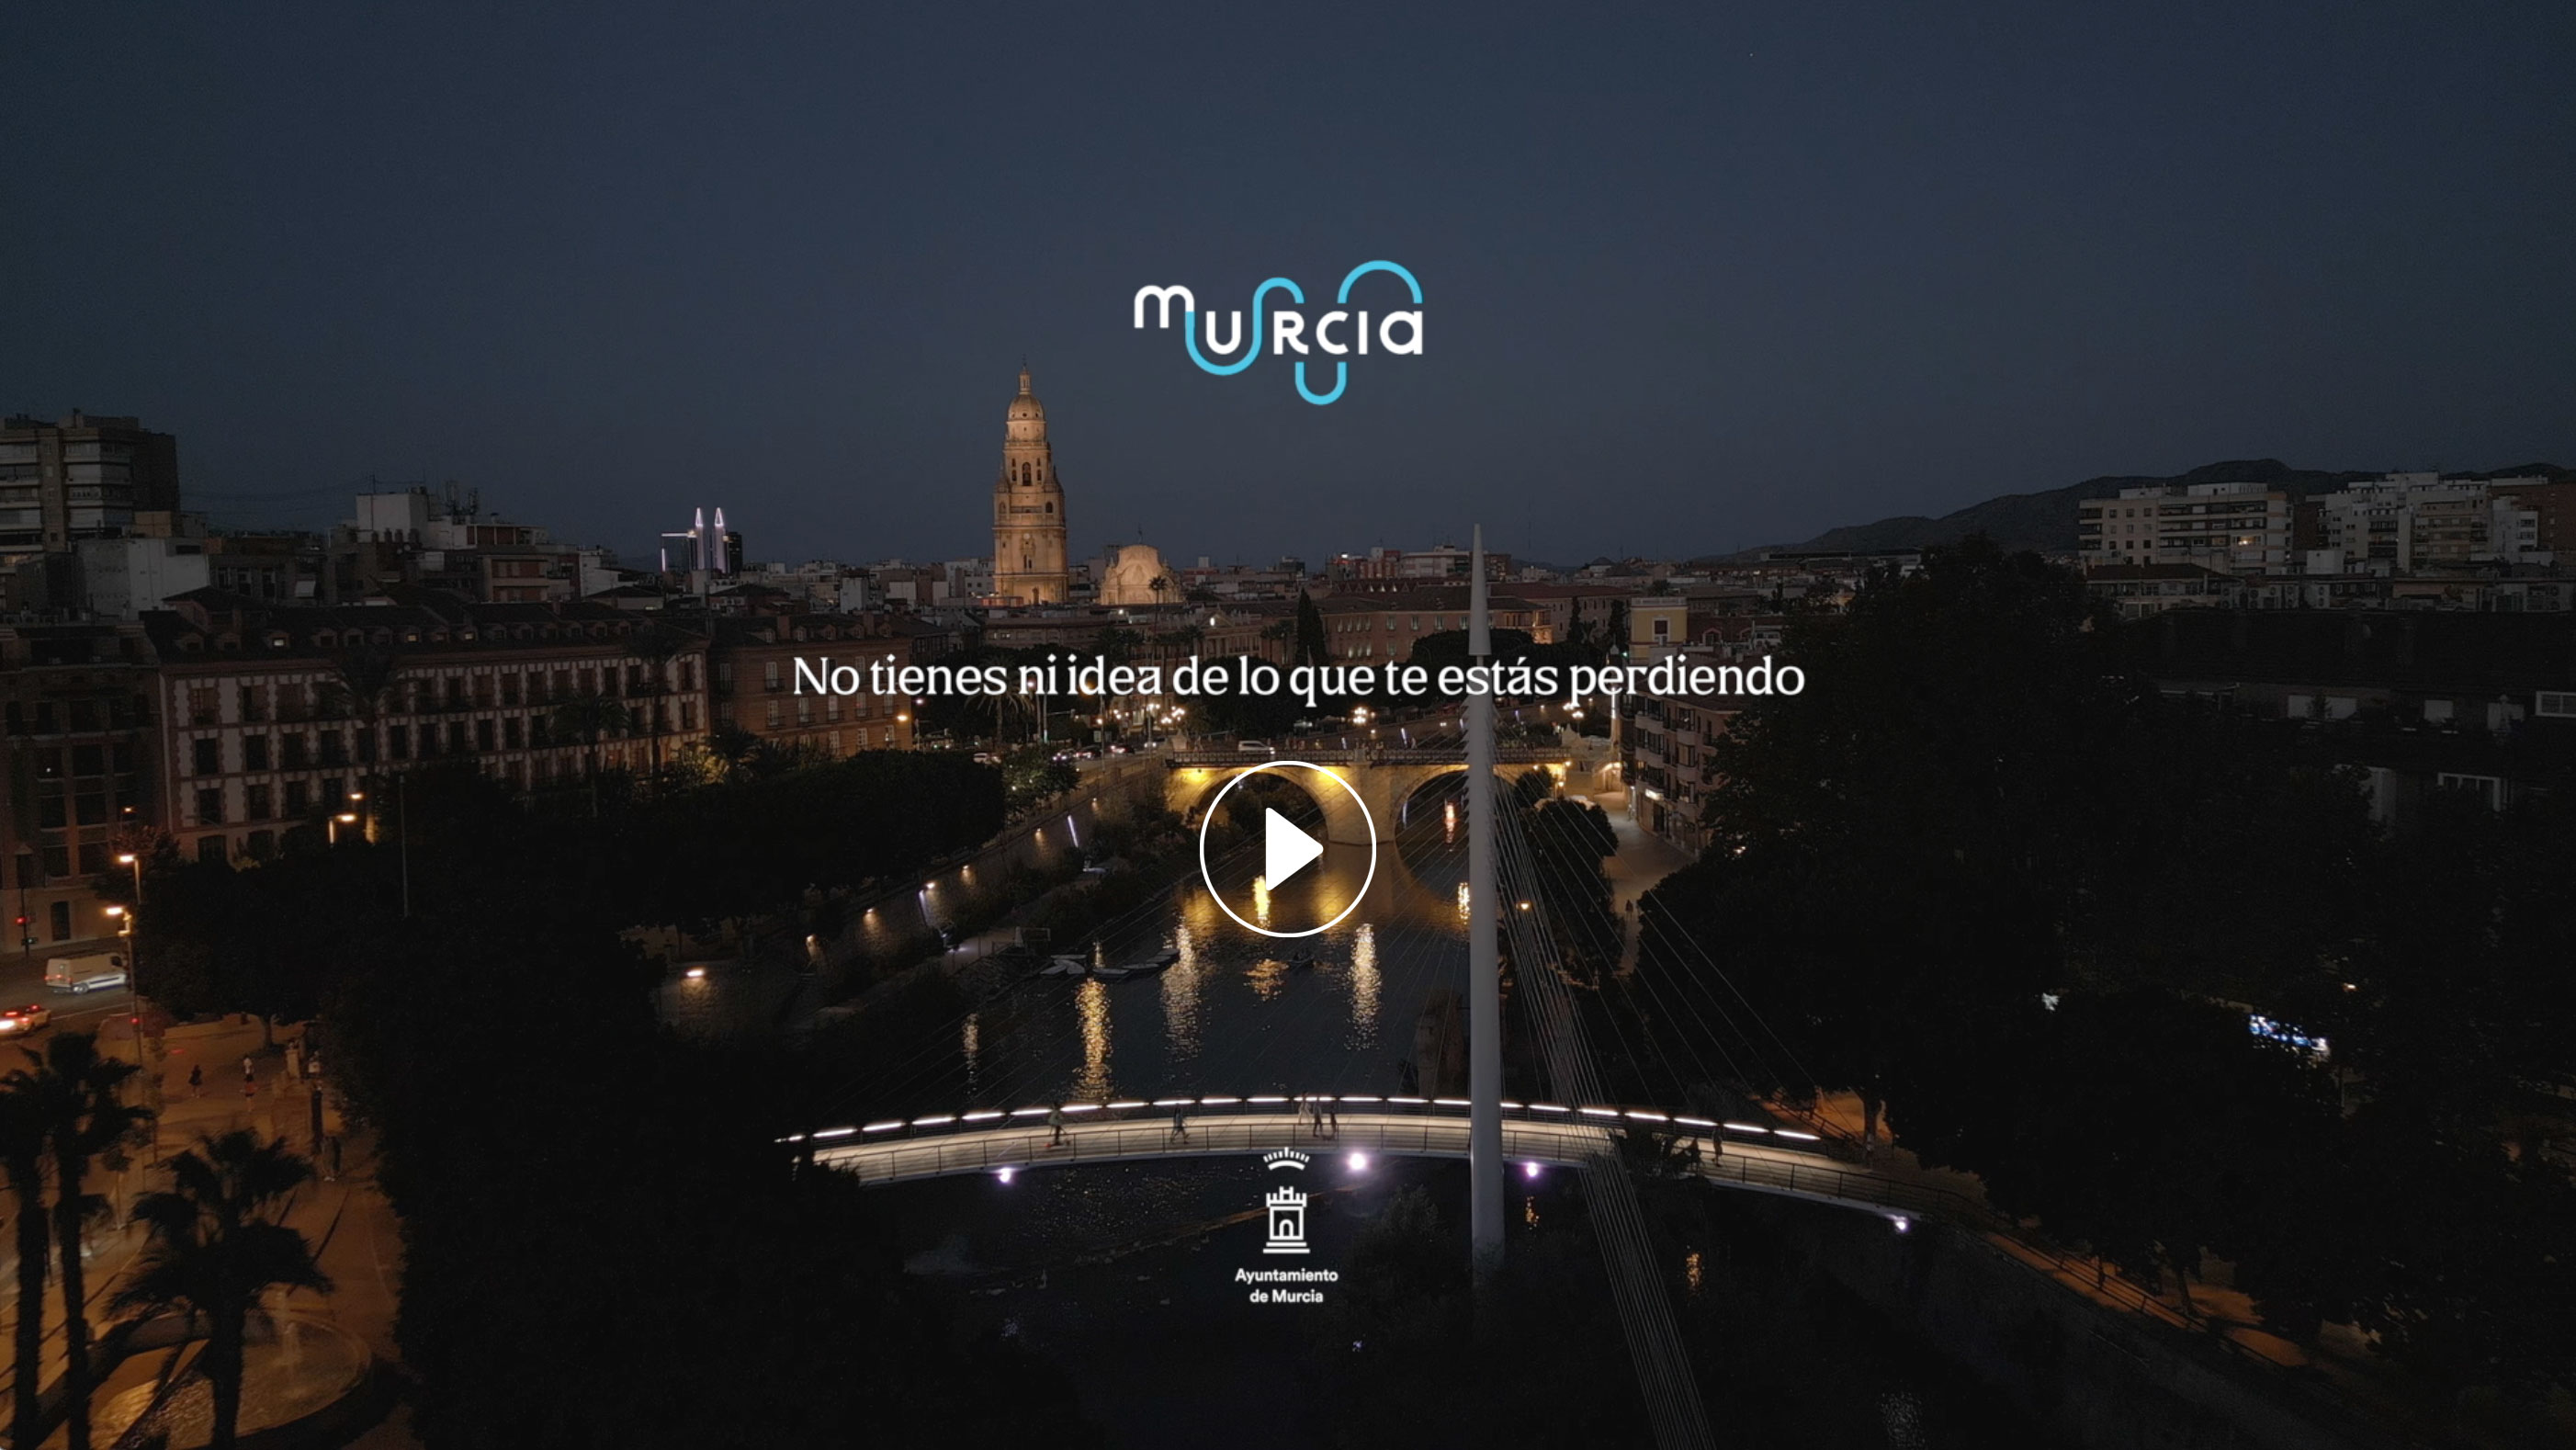 Turismo de Murcia